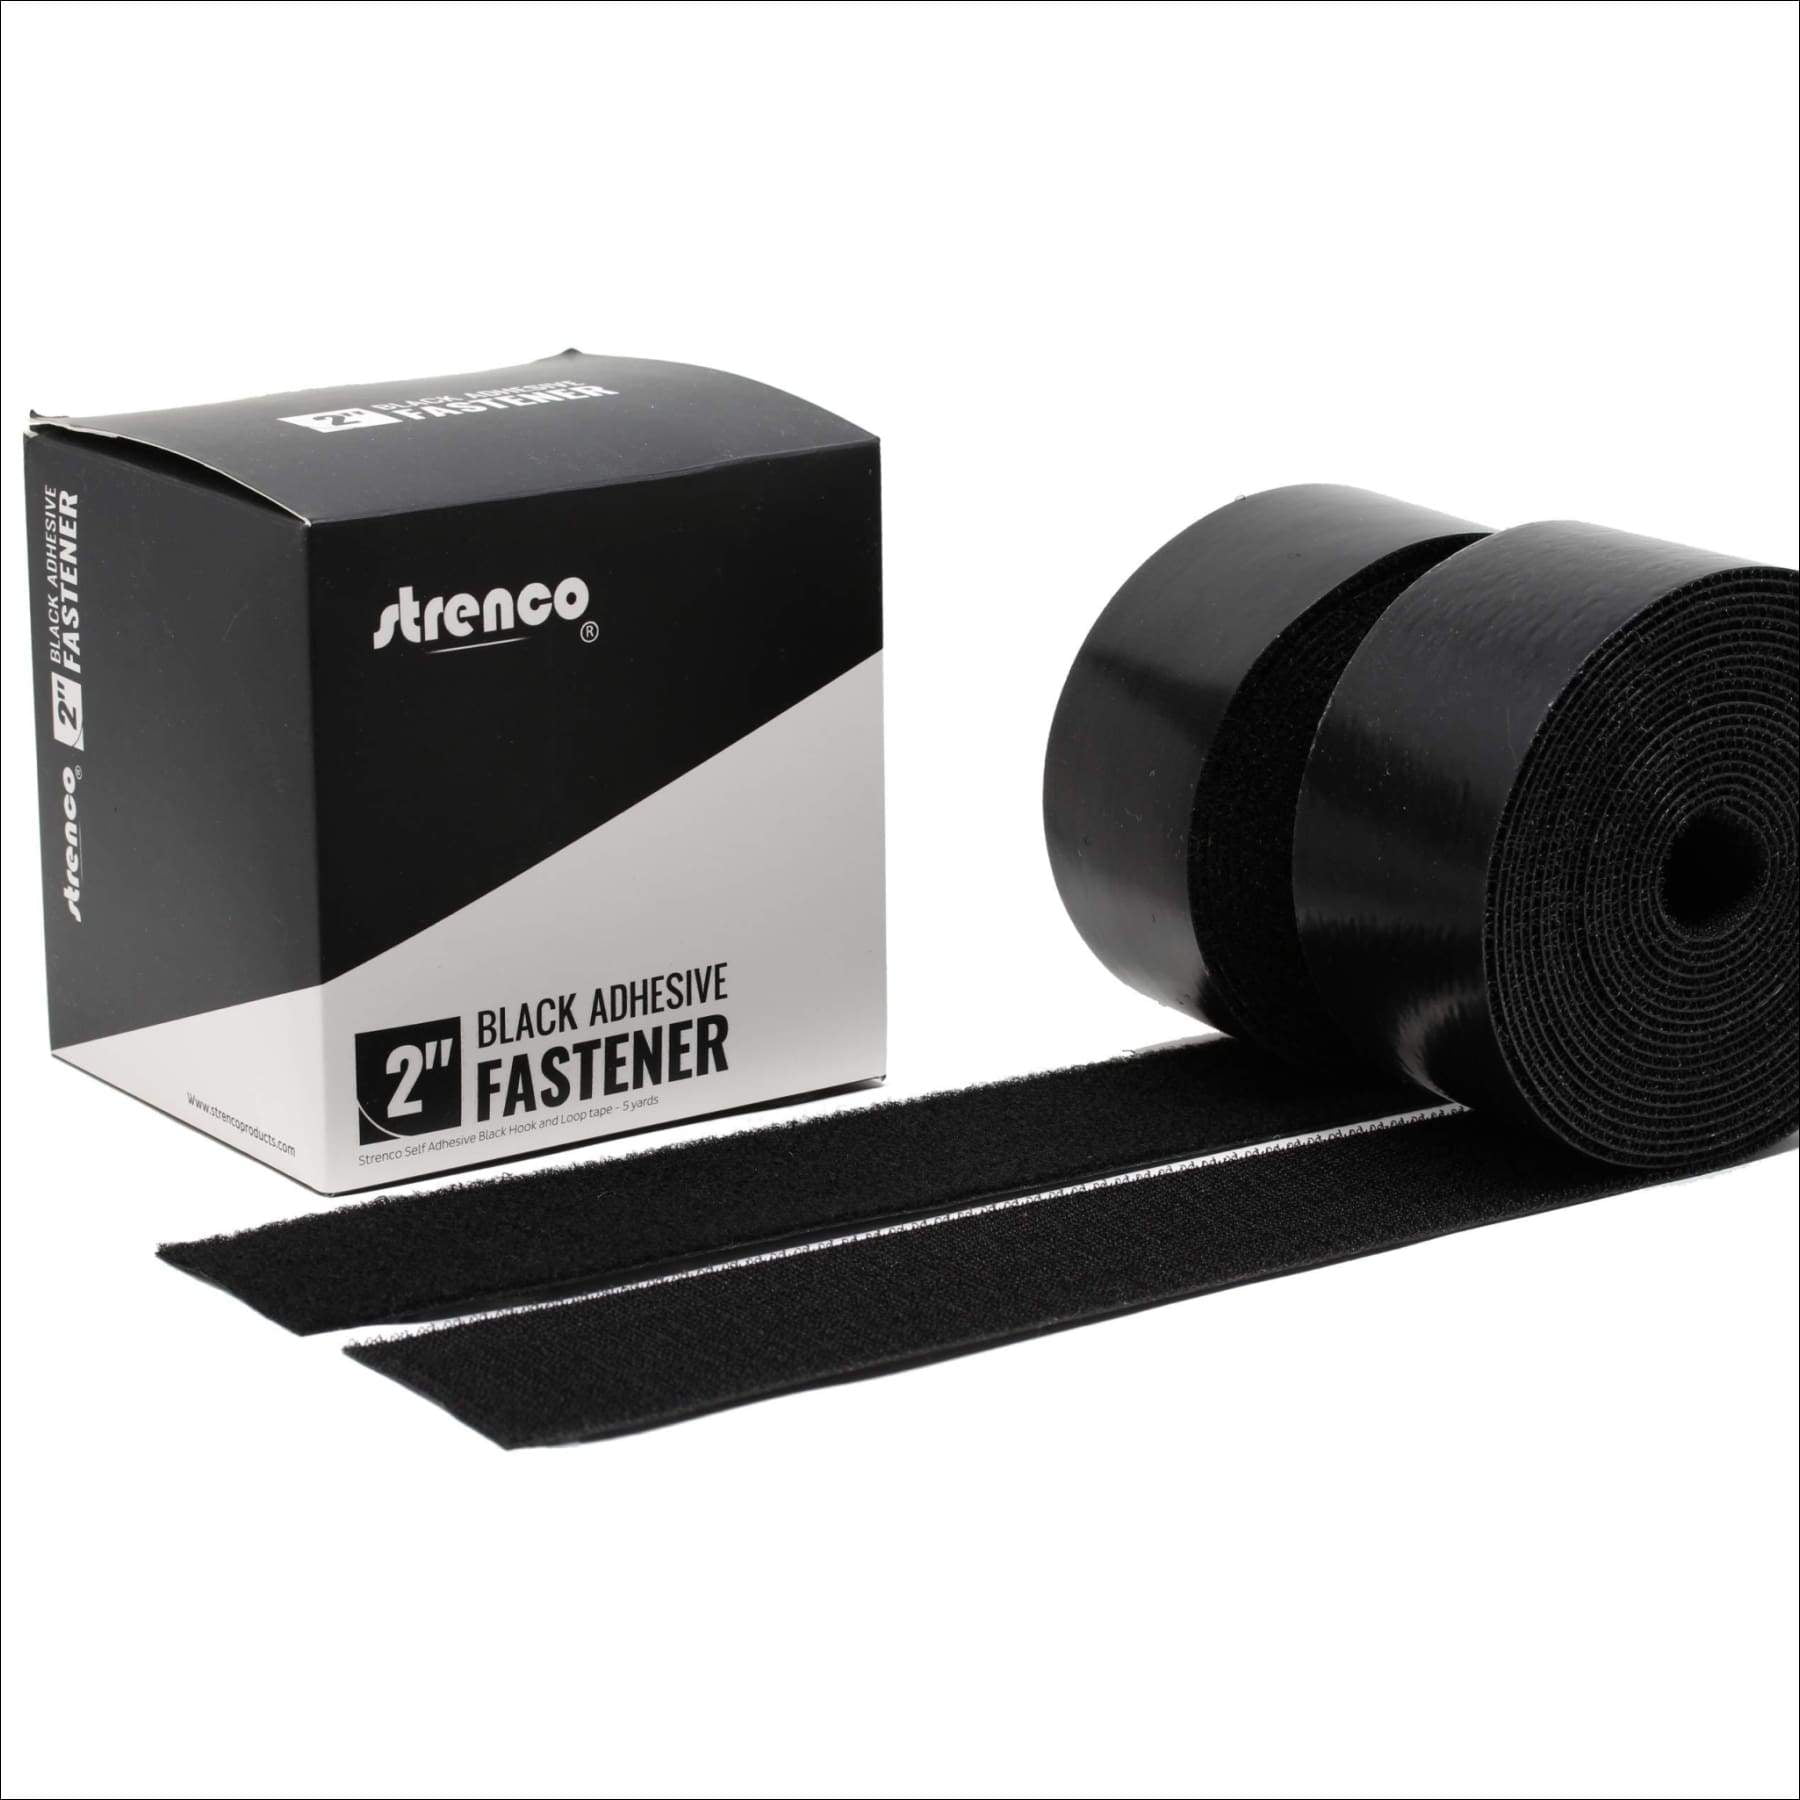 Strenco 2 Inch Adhesive Black Hook and Loop Tape - 5 Yards - Heavy